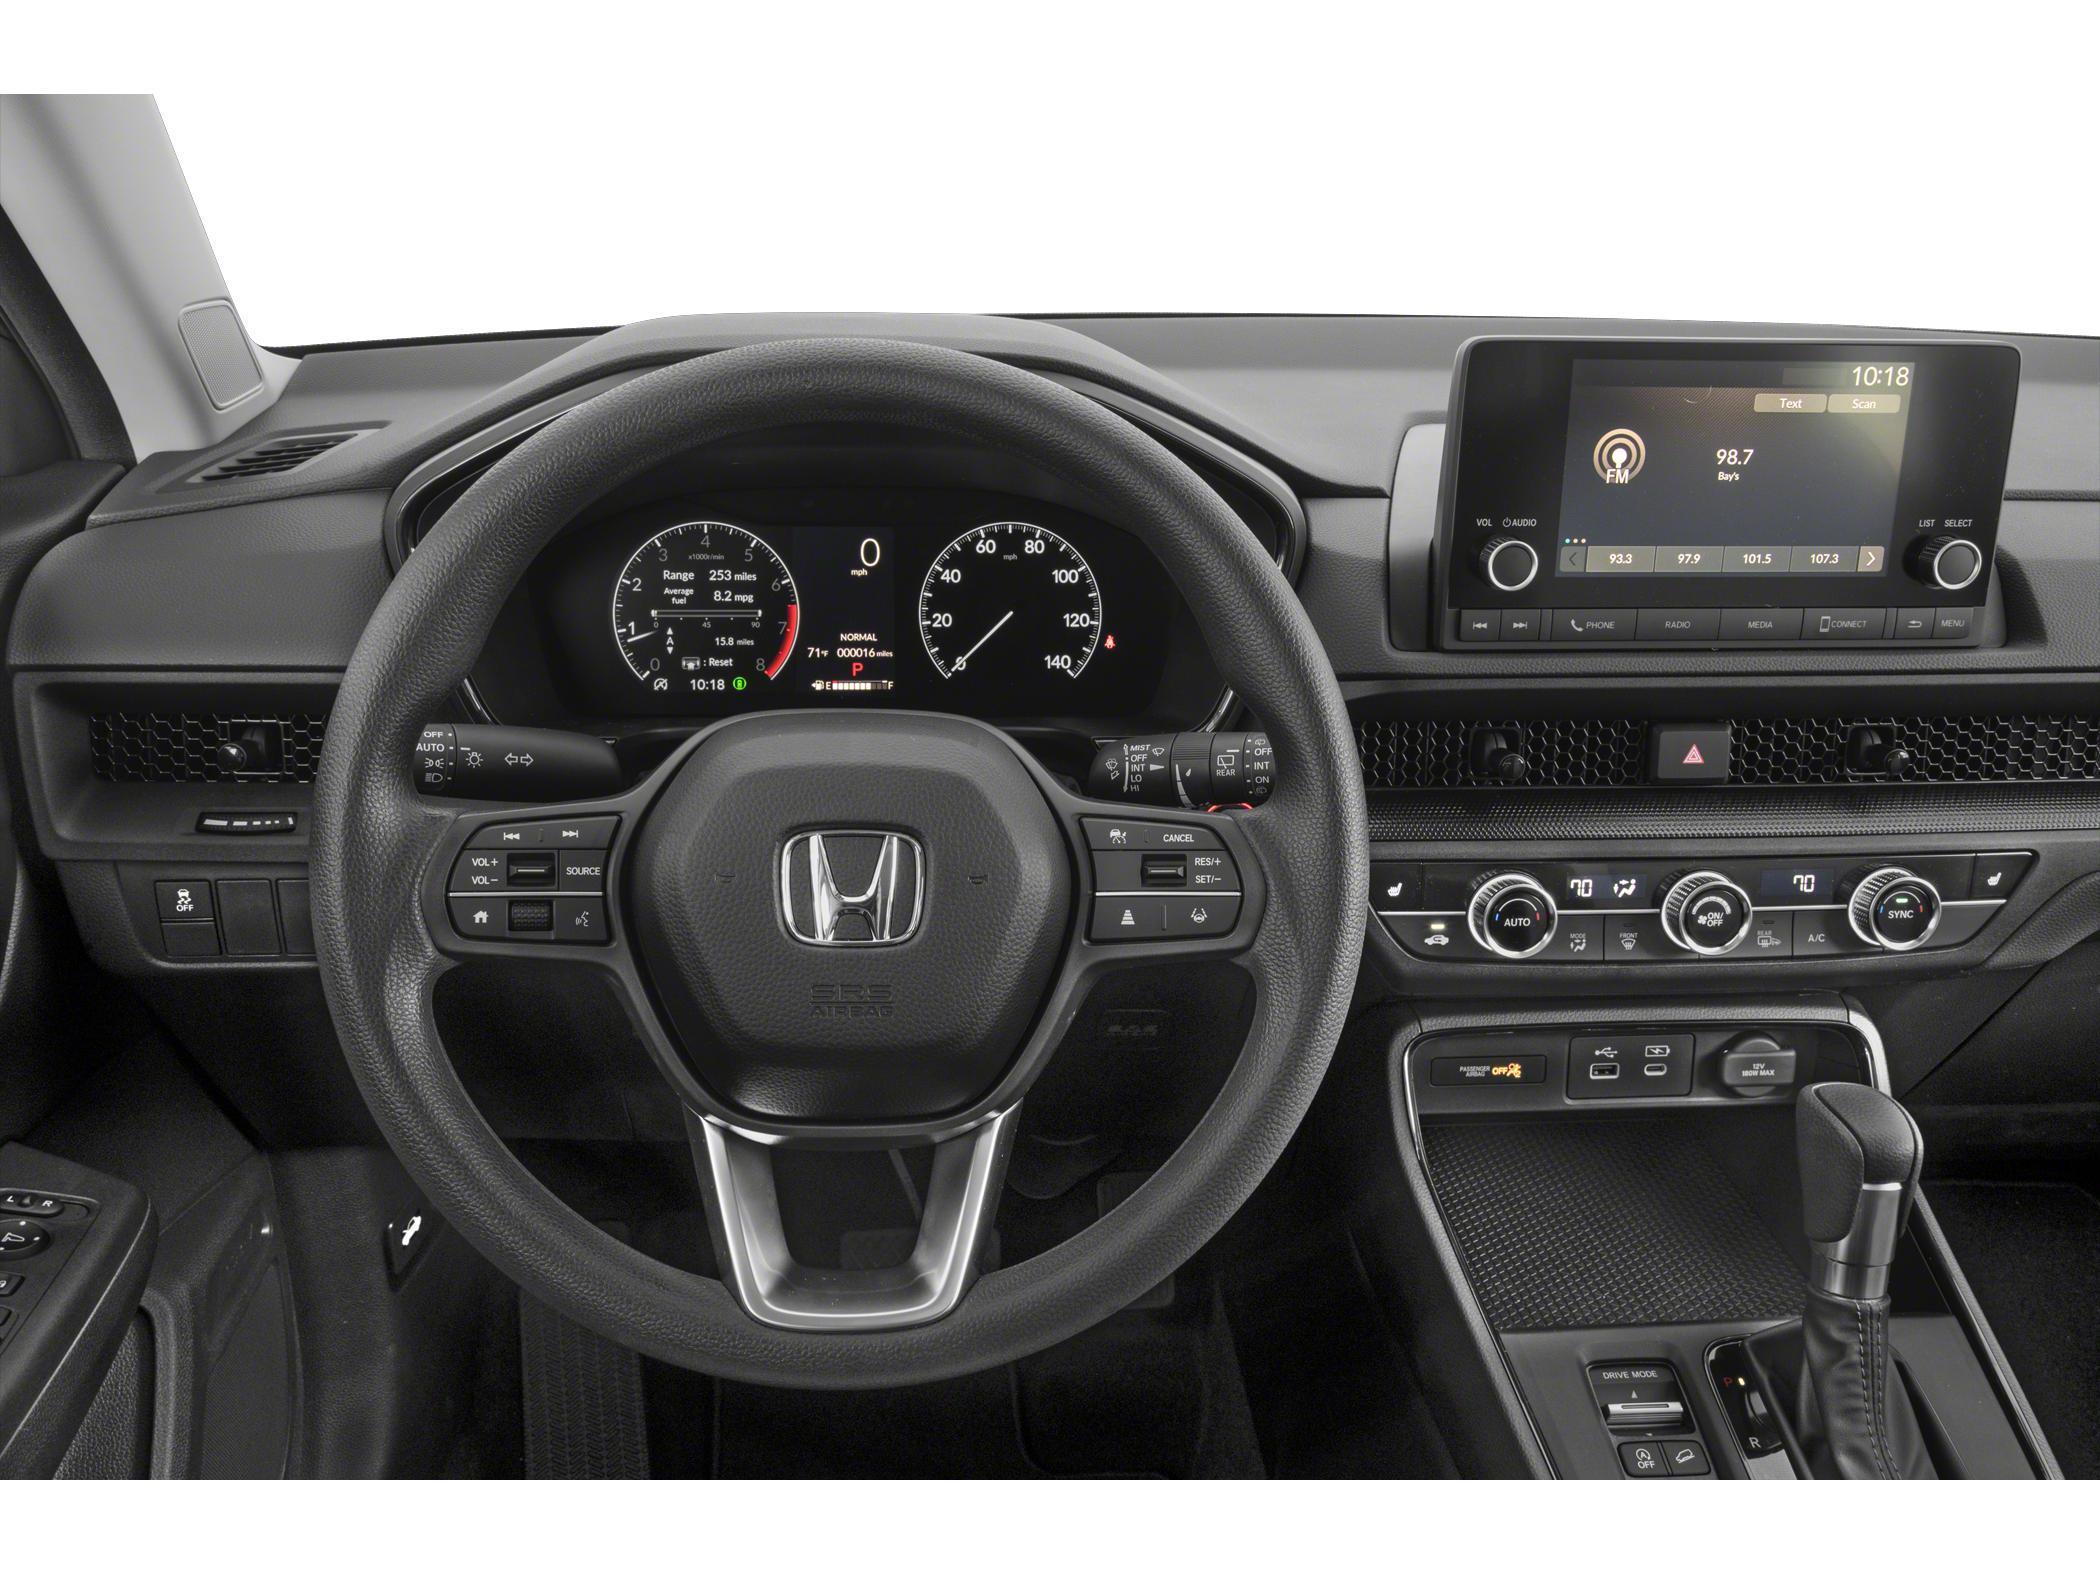 Honda CR-V #3 Hero Image